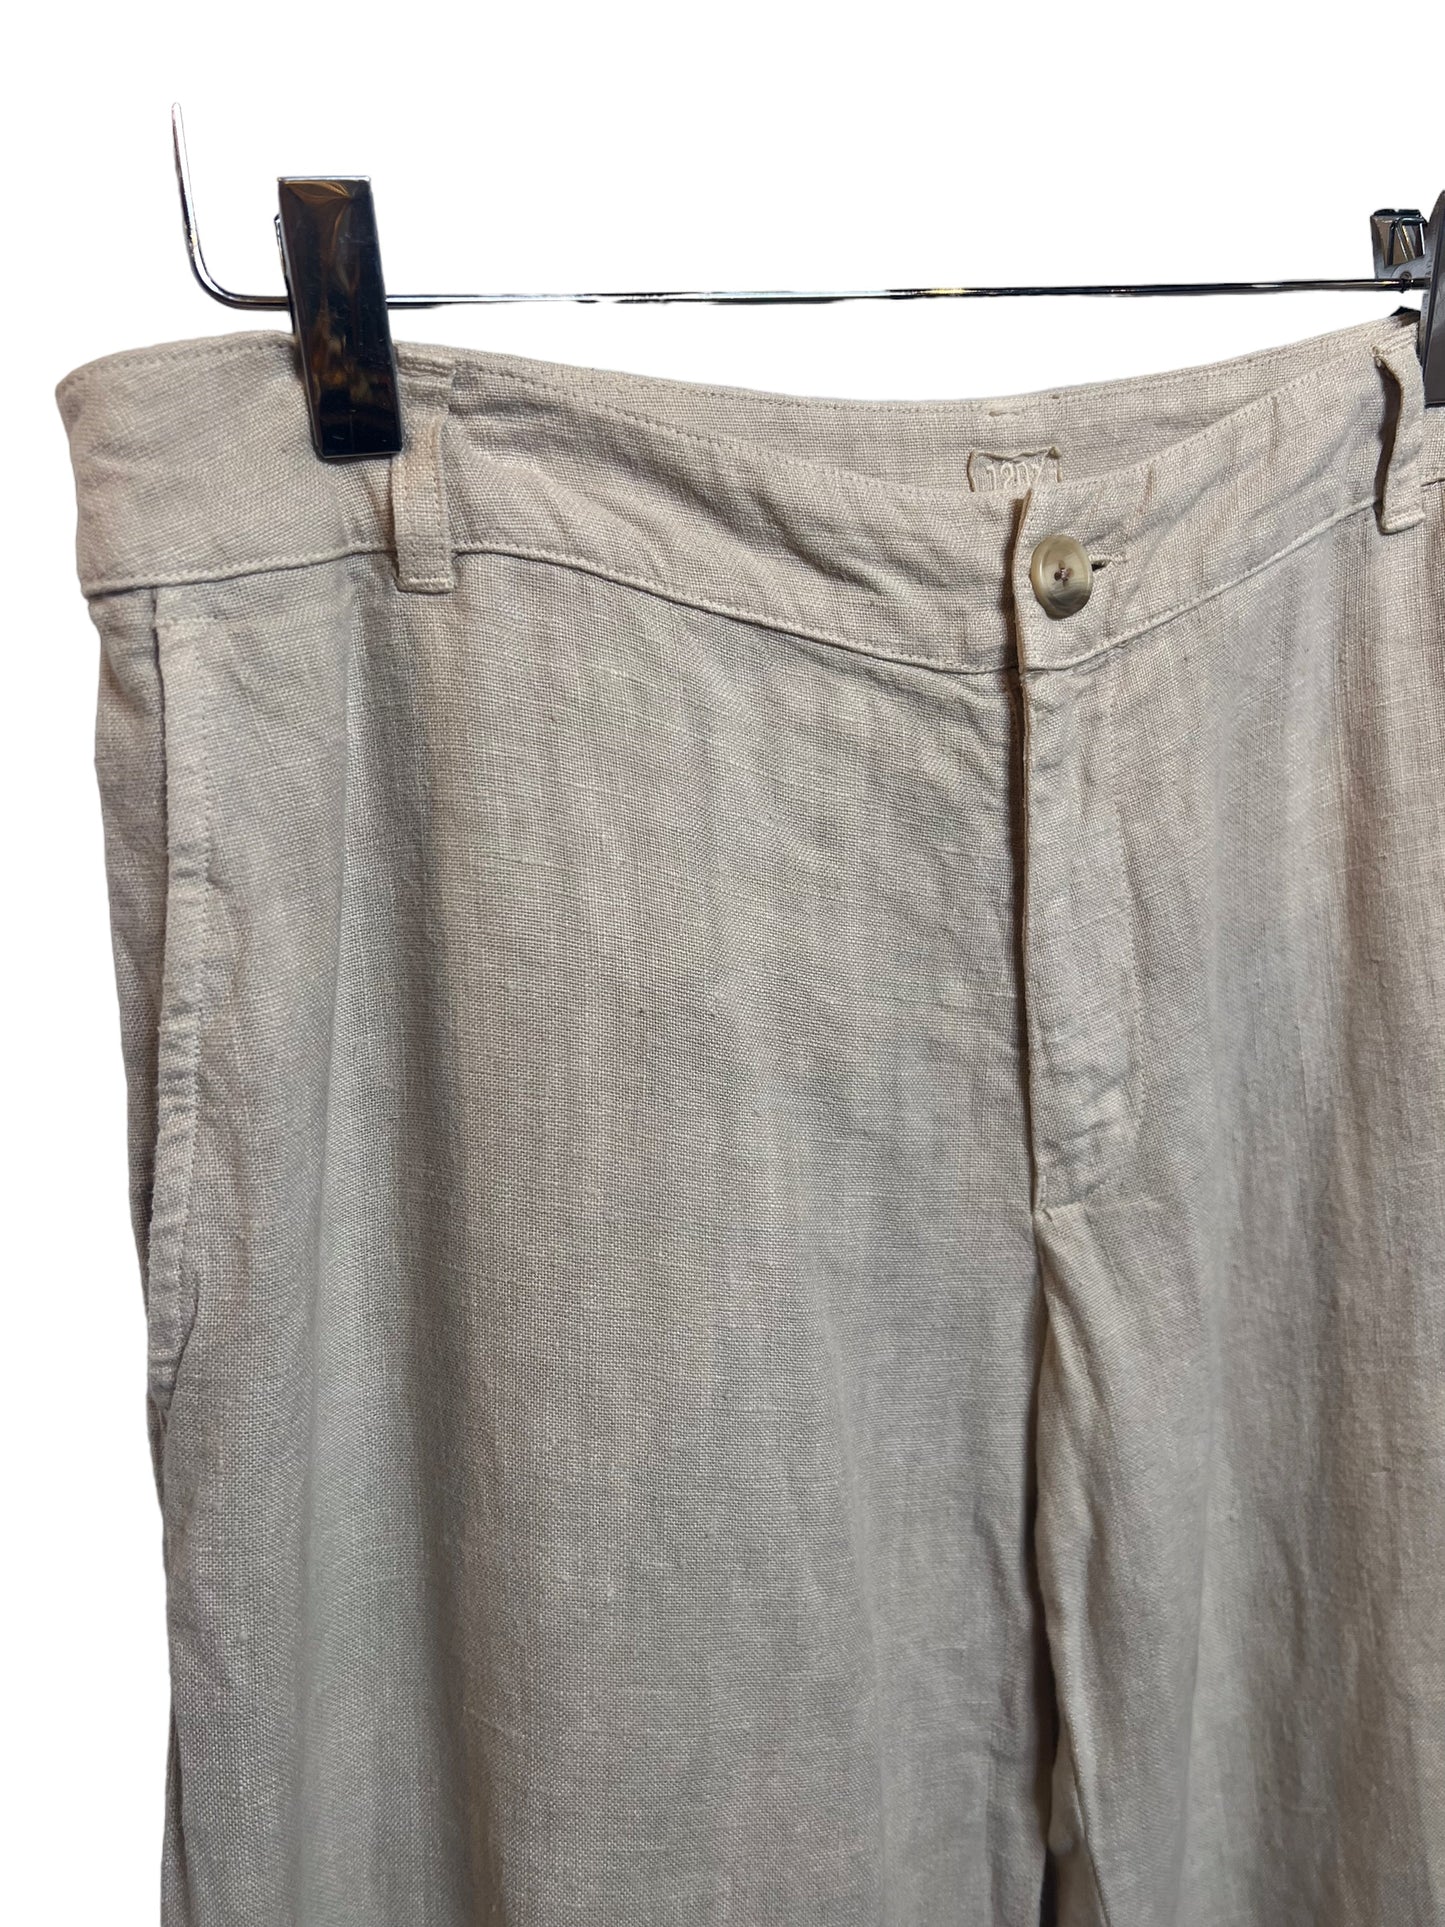 Men’s Linen Cream Trousers (30x33)